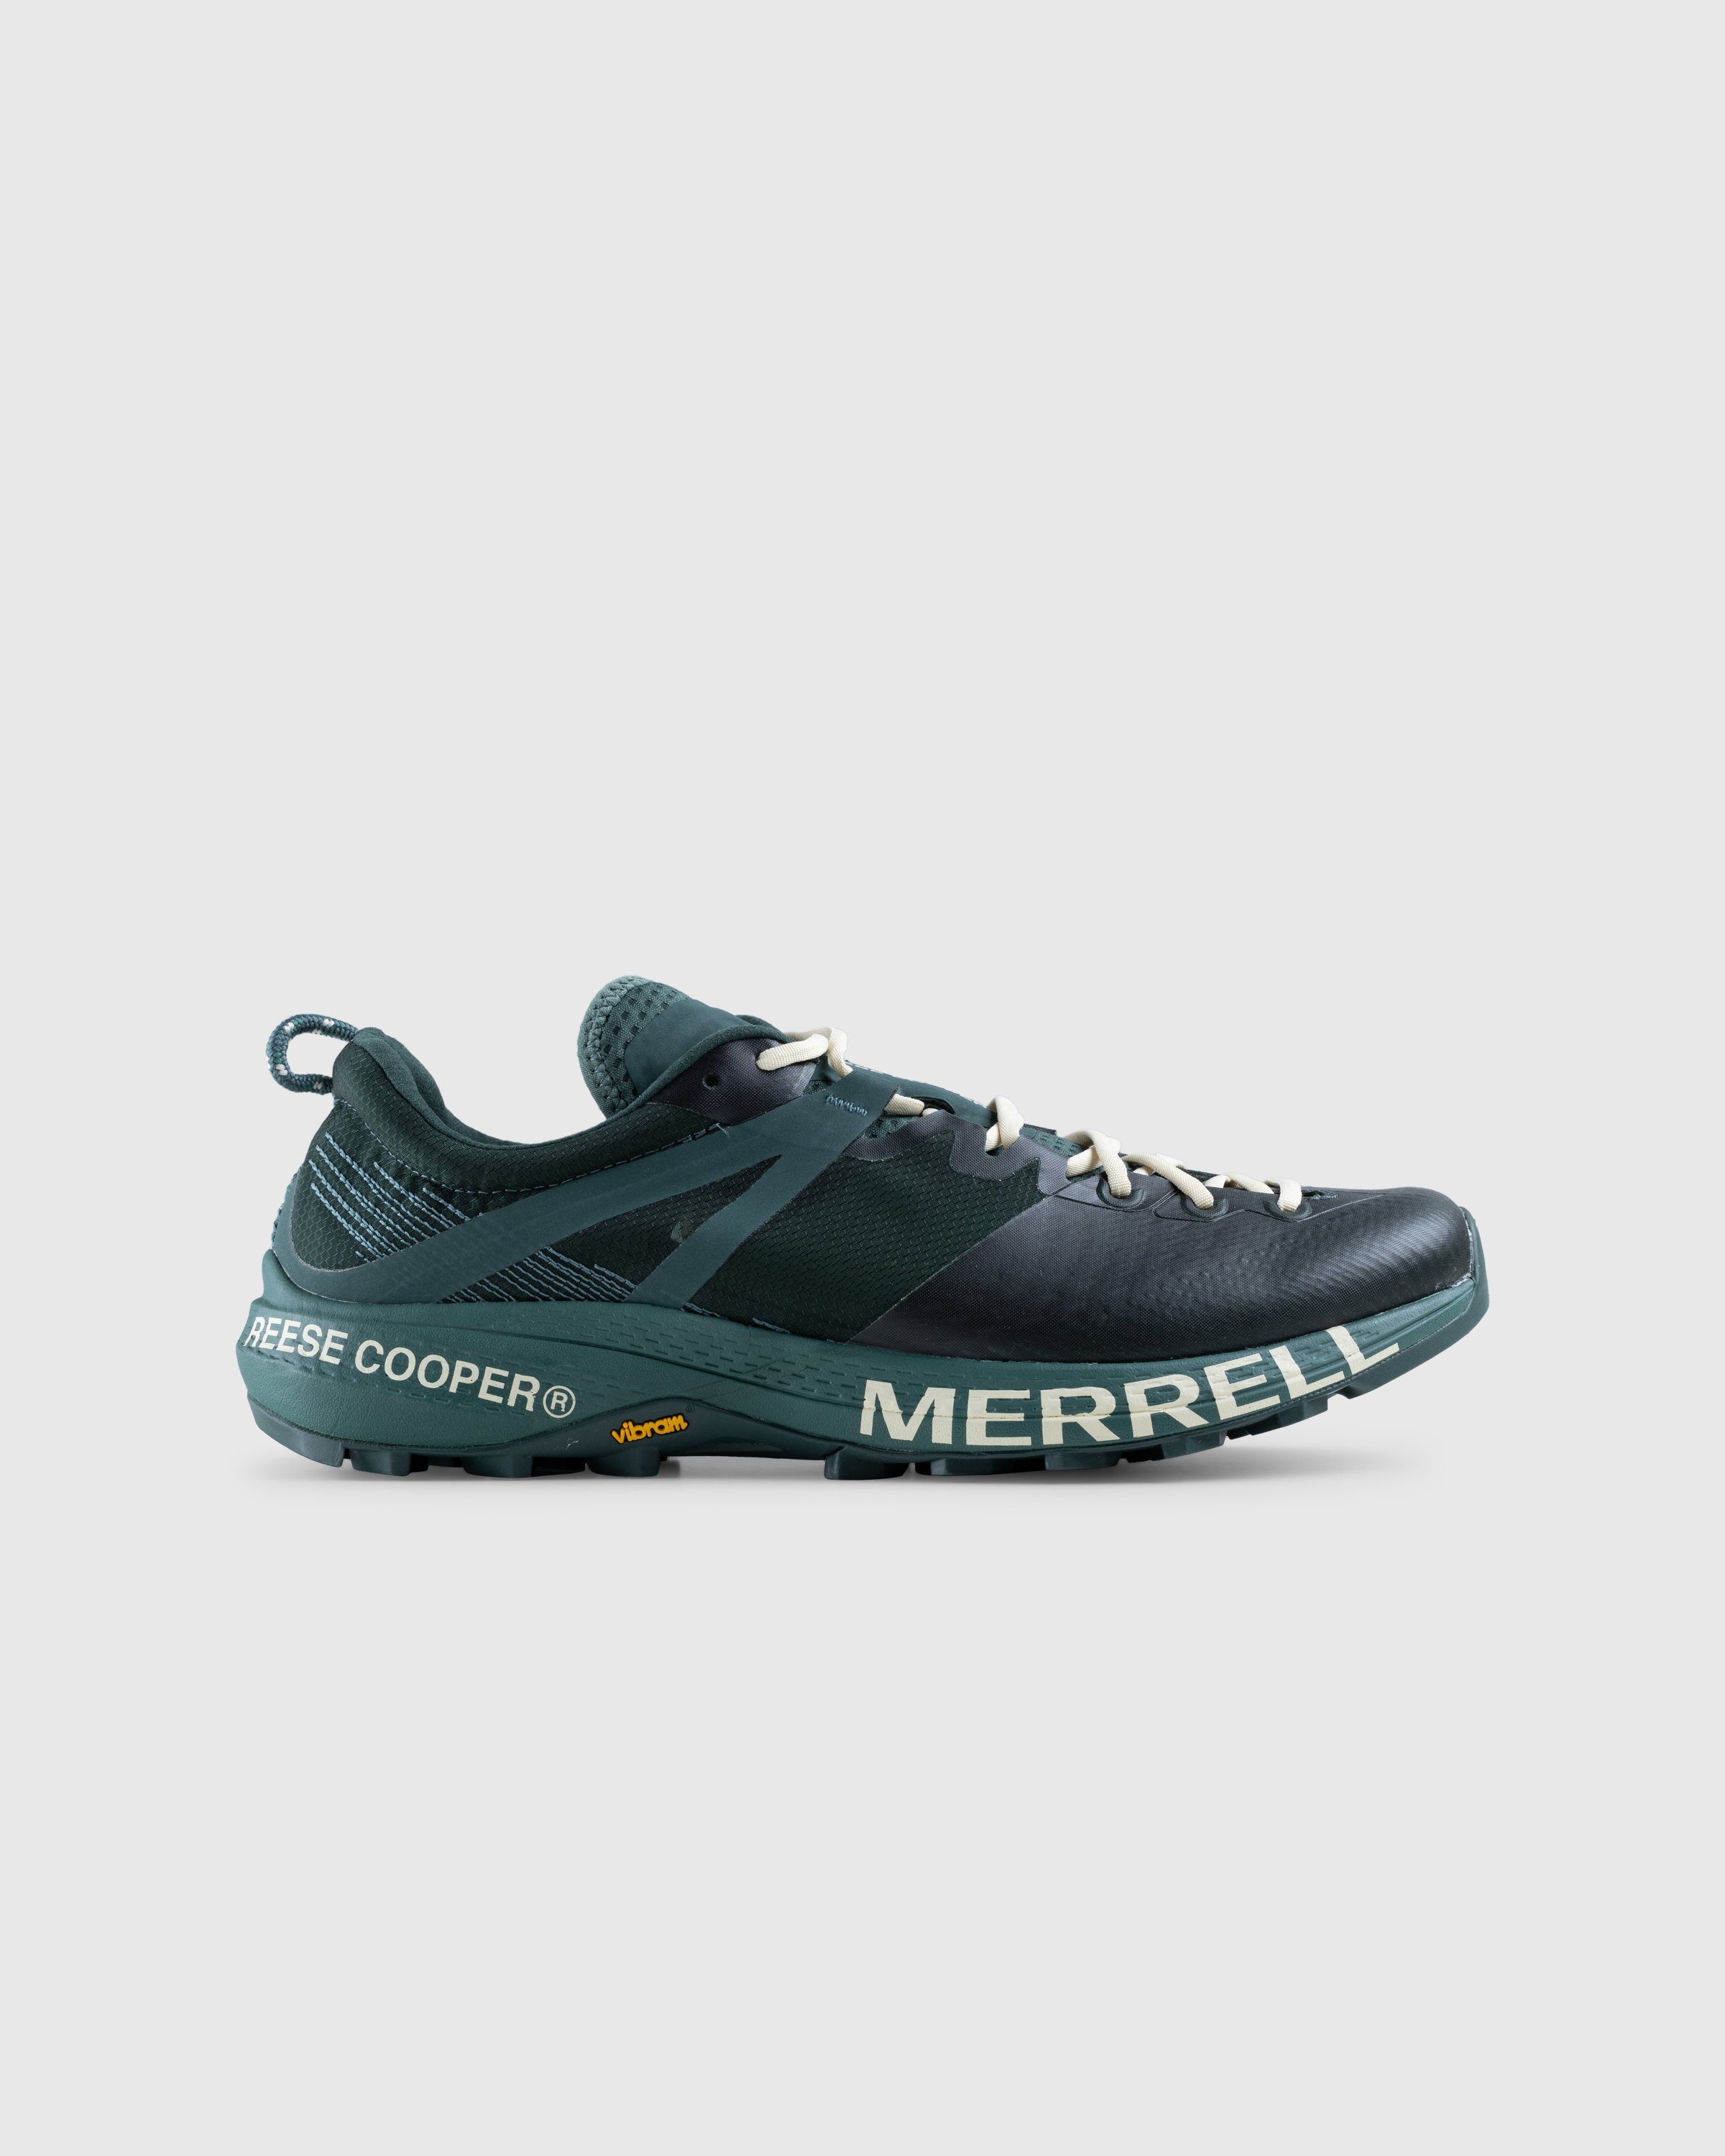 Merrell x Reese Cooper - MTL MQM Hunter Green - Footwear - Green - Image 1